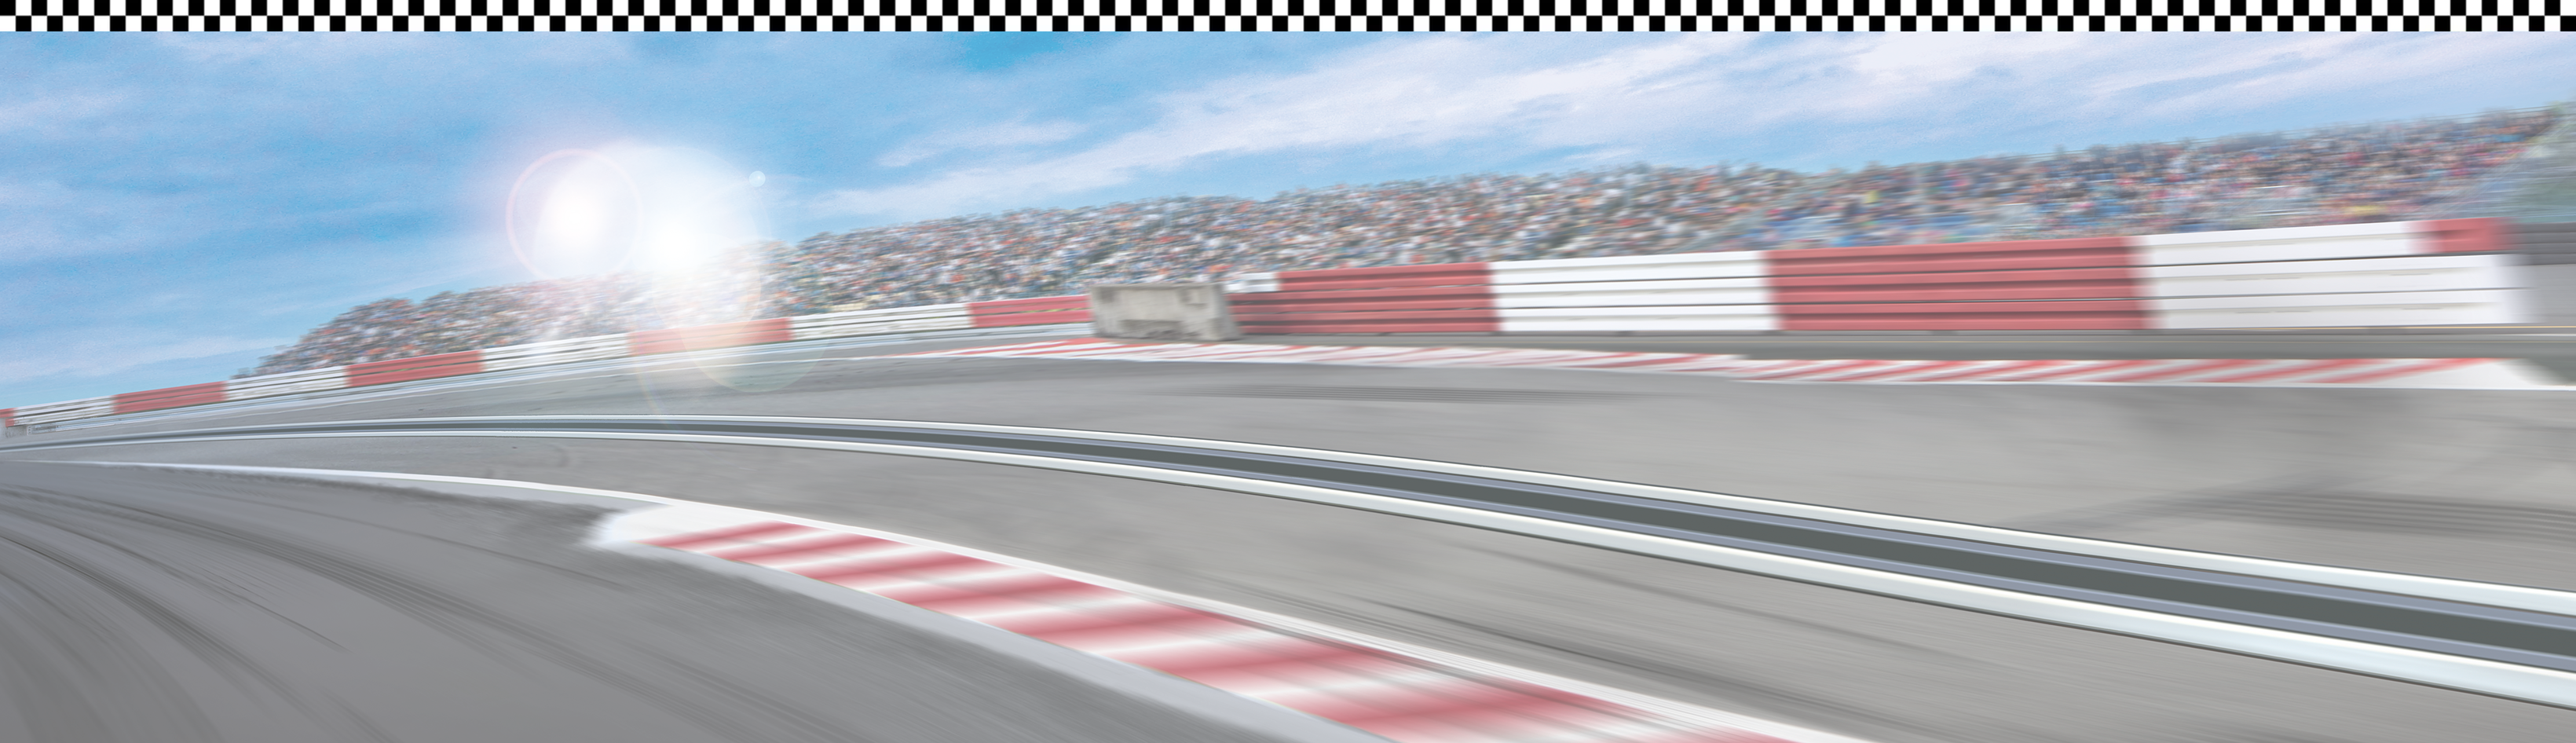 Carrera GO!!! 62543 DTM Speedway Masters Set - Slot Car-Union